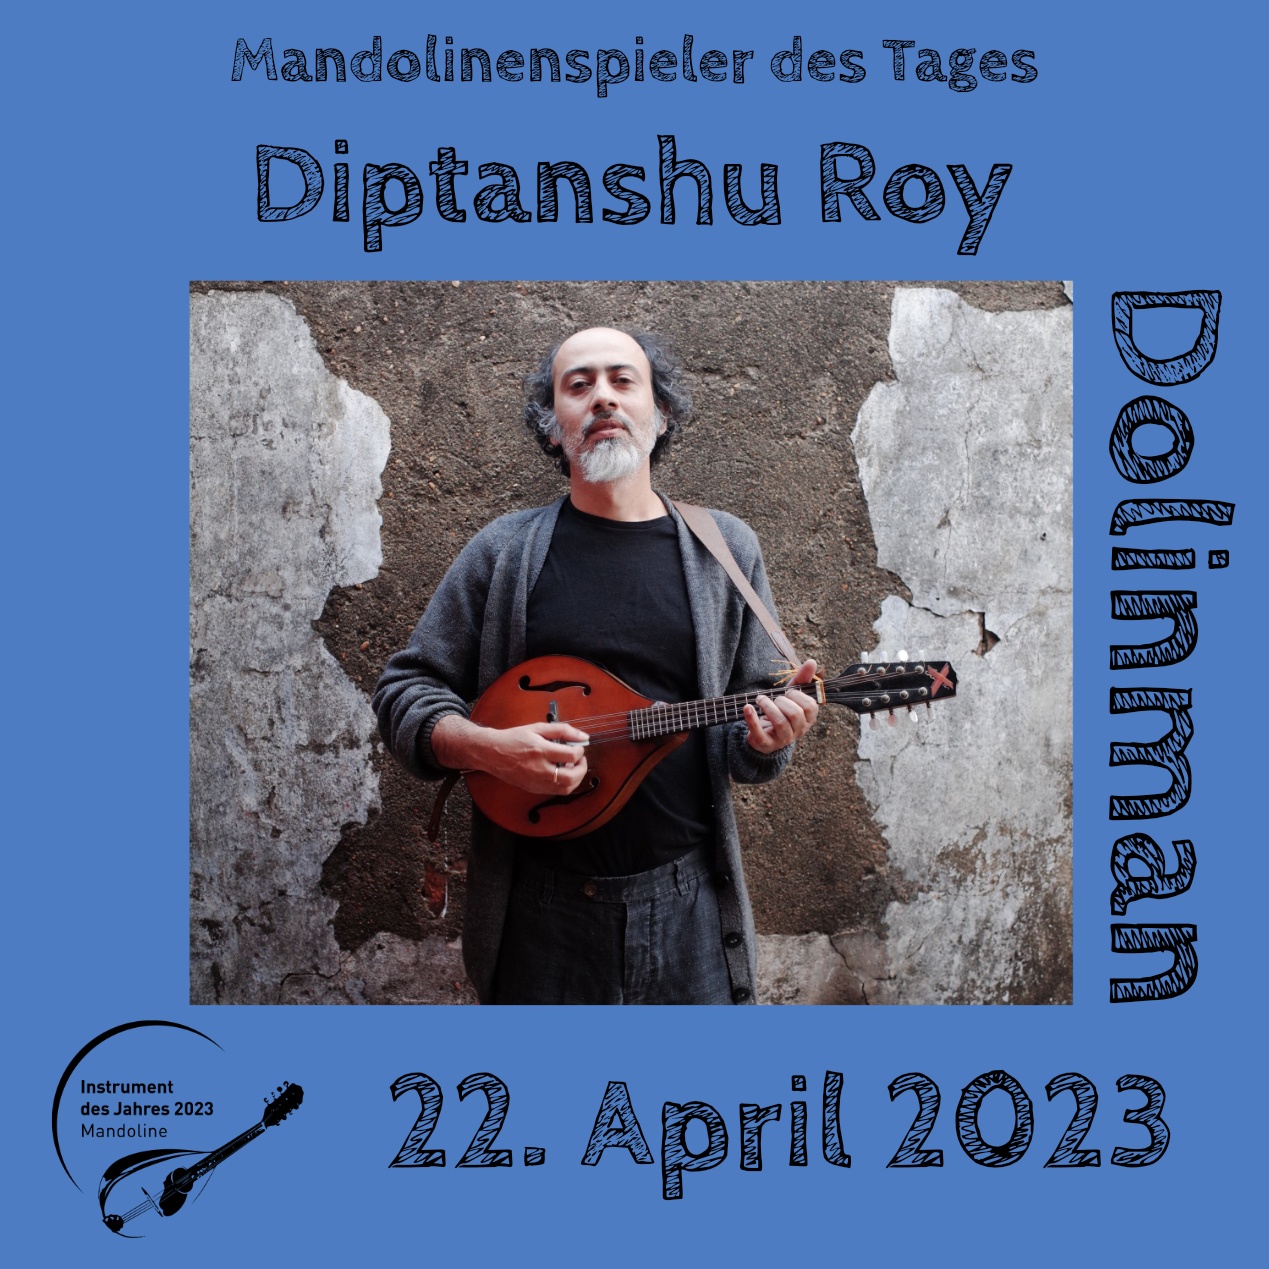 Diptanshu Roy / Dolinman Instrument des Jahres 2023 Mandolinenspieler Mandolinenspielerin des Tages